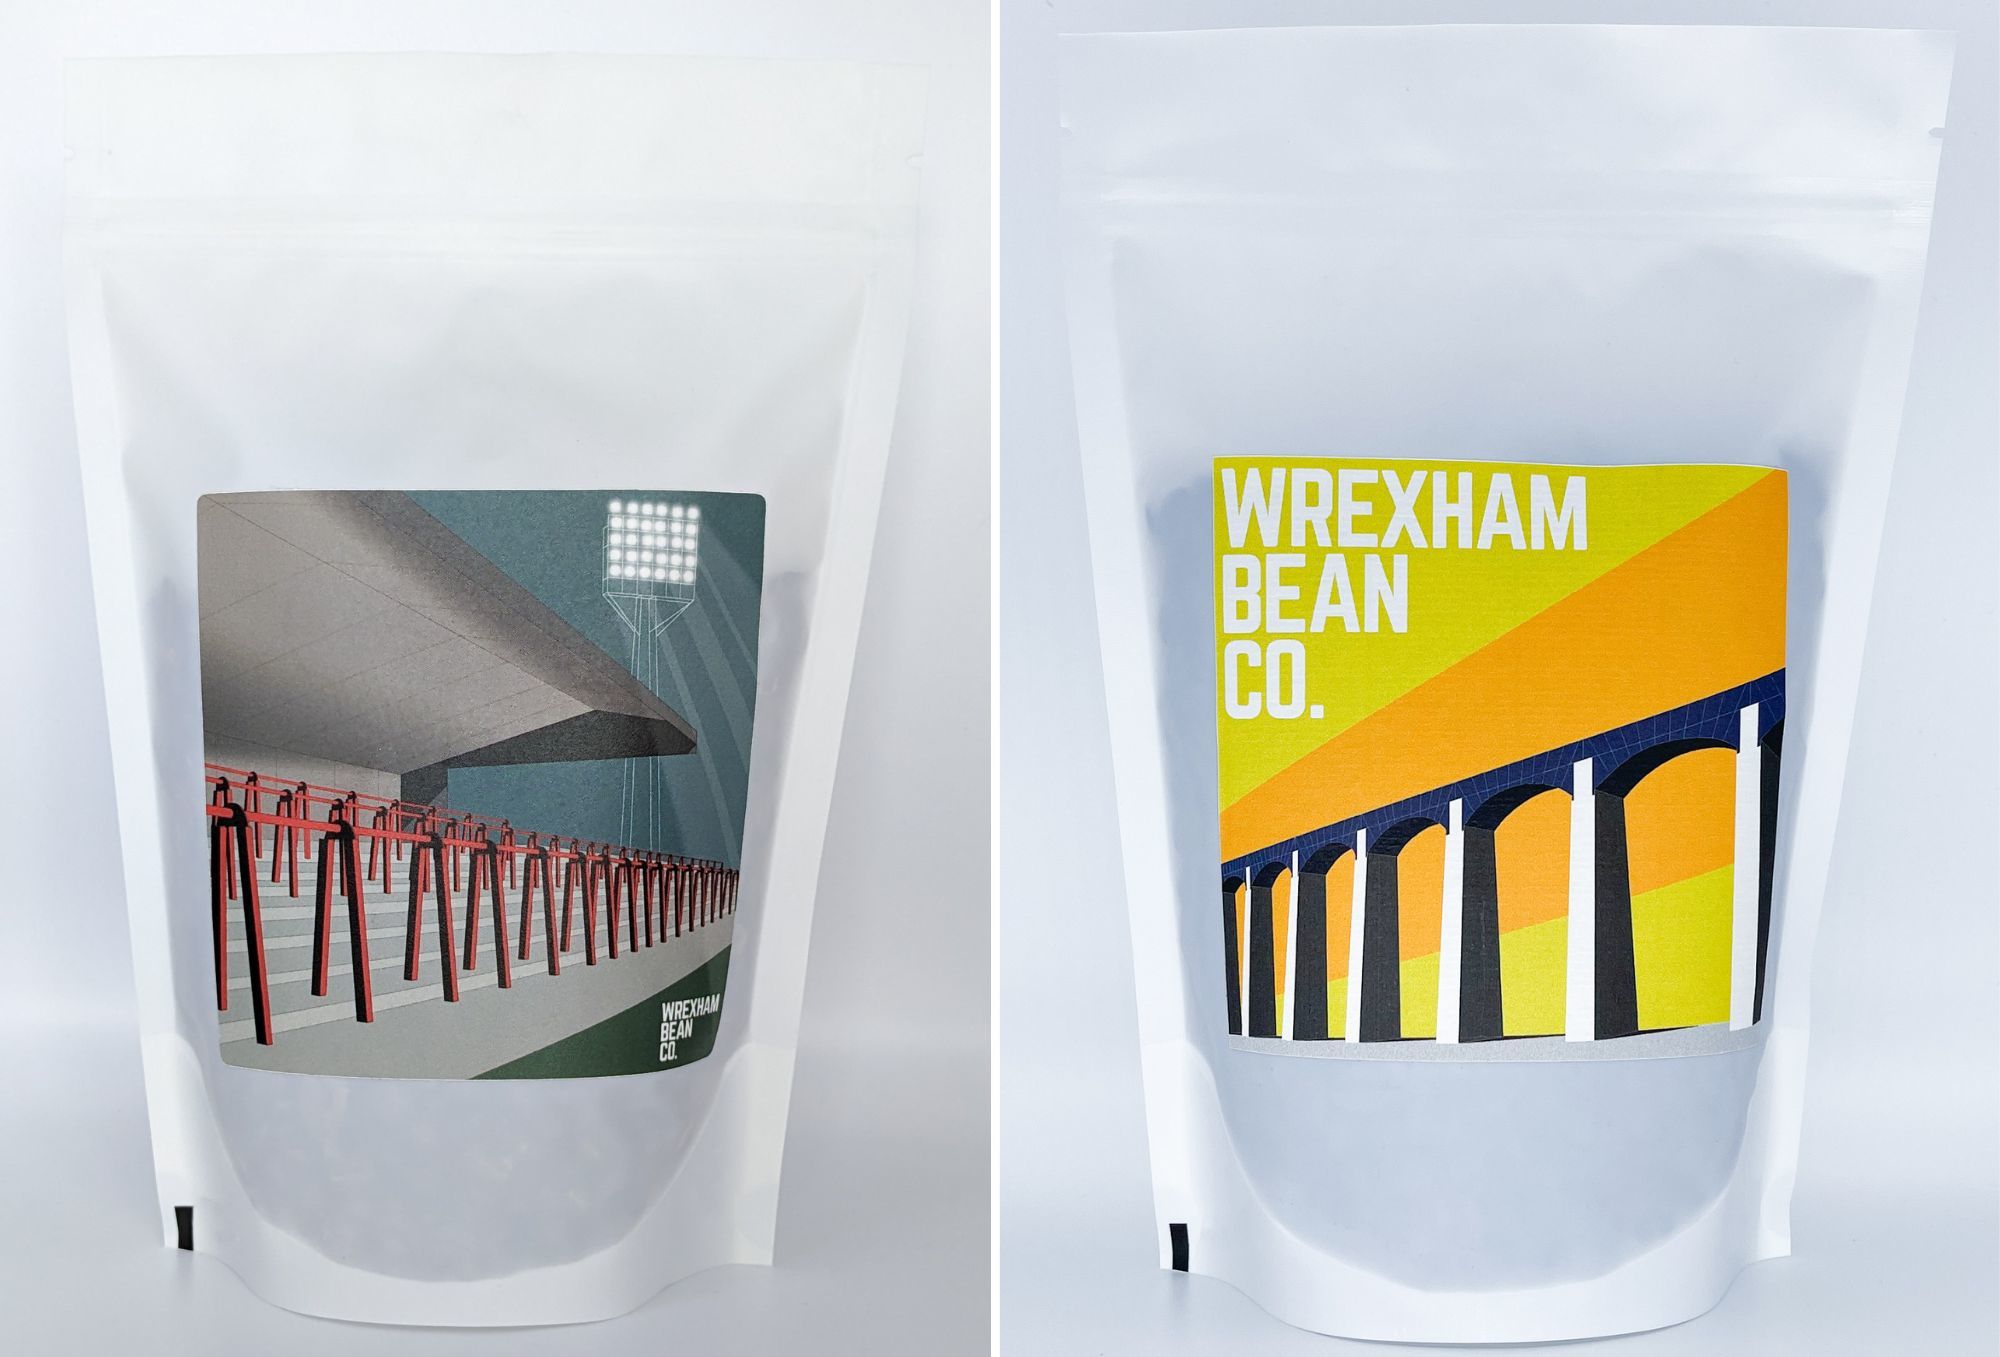 Wrexham Bean Co. coffee bags branded with designs of Wrexham landmarks.